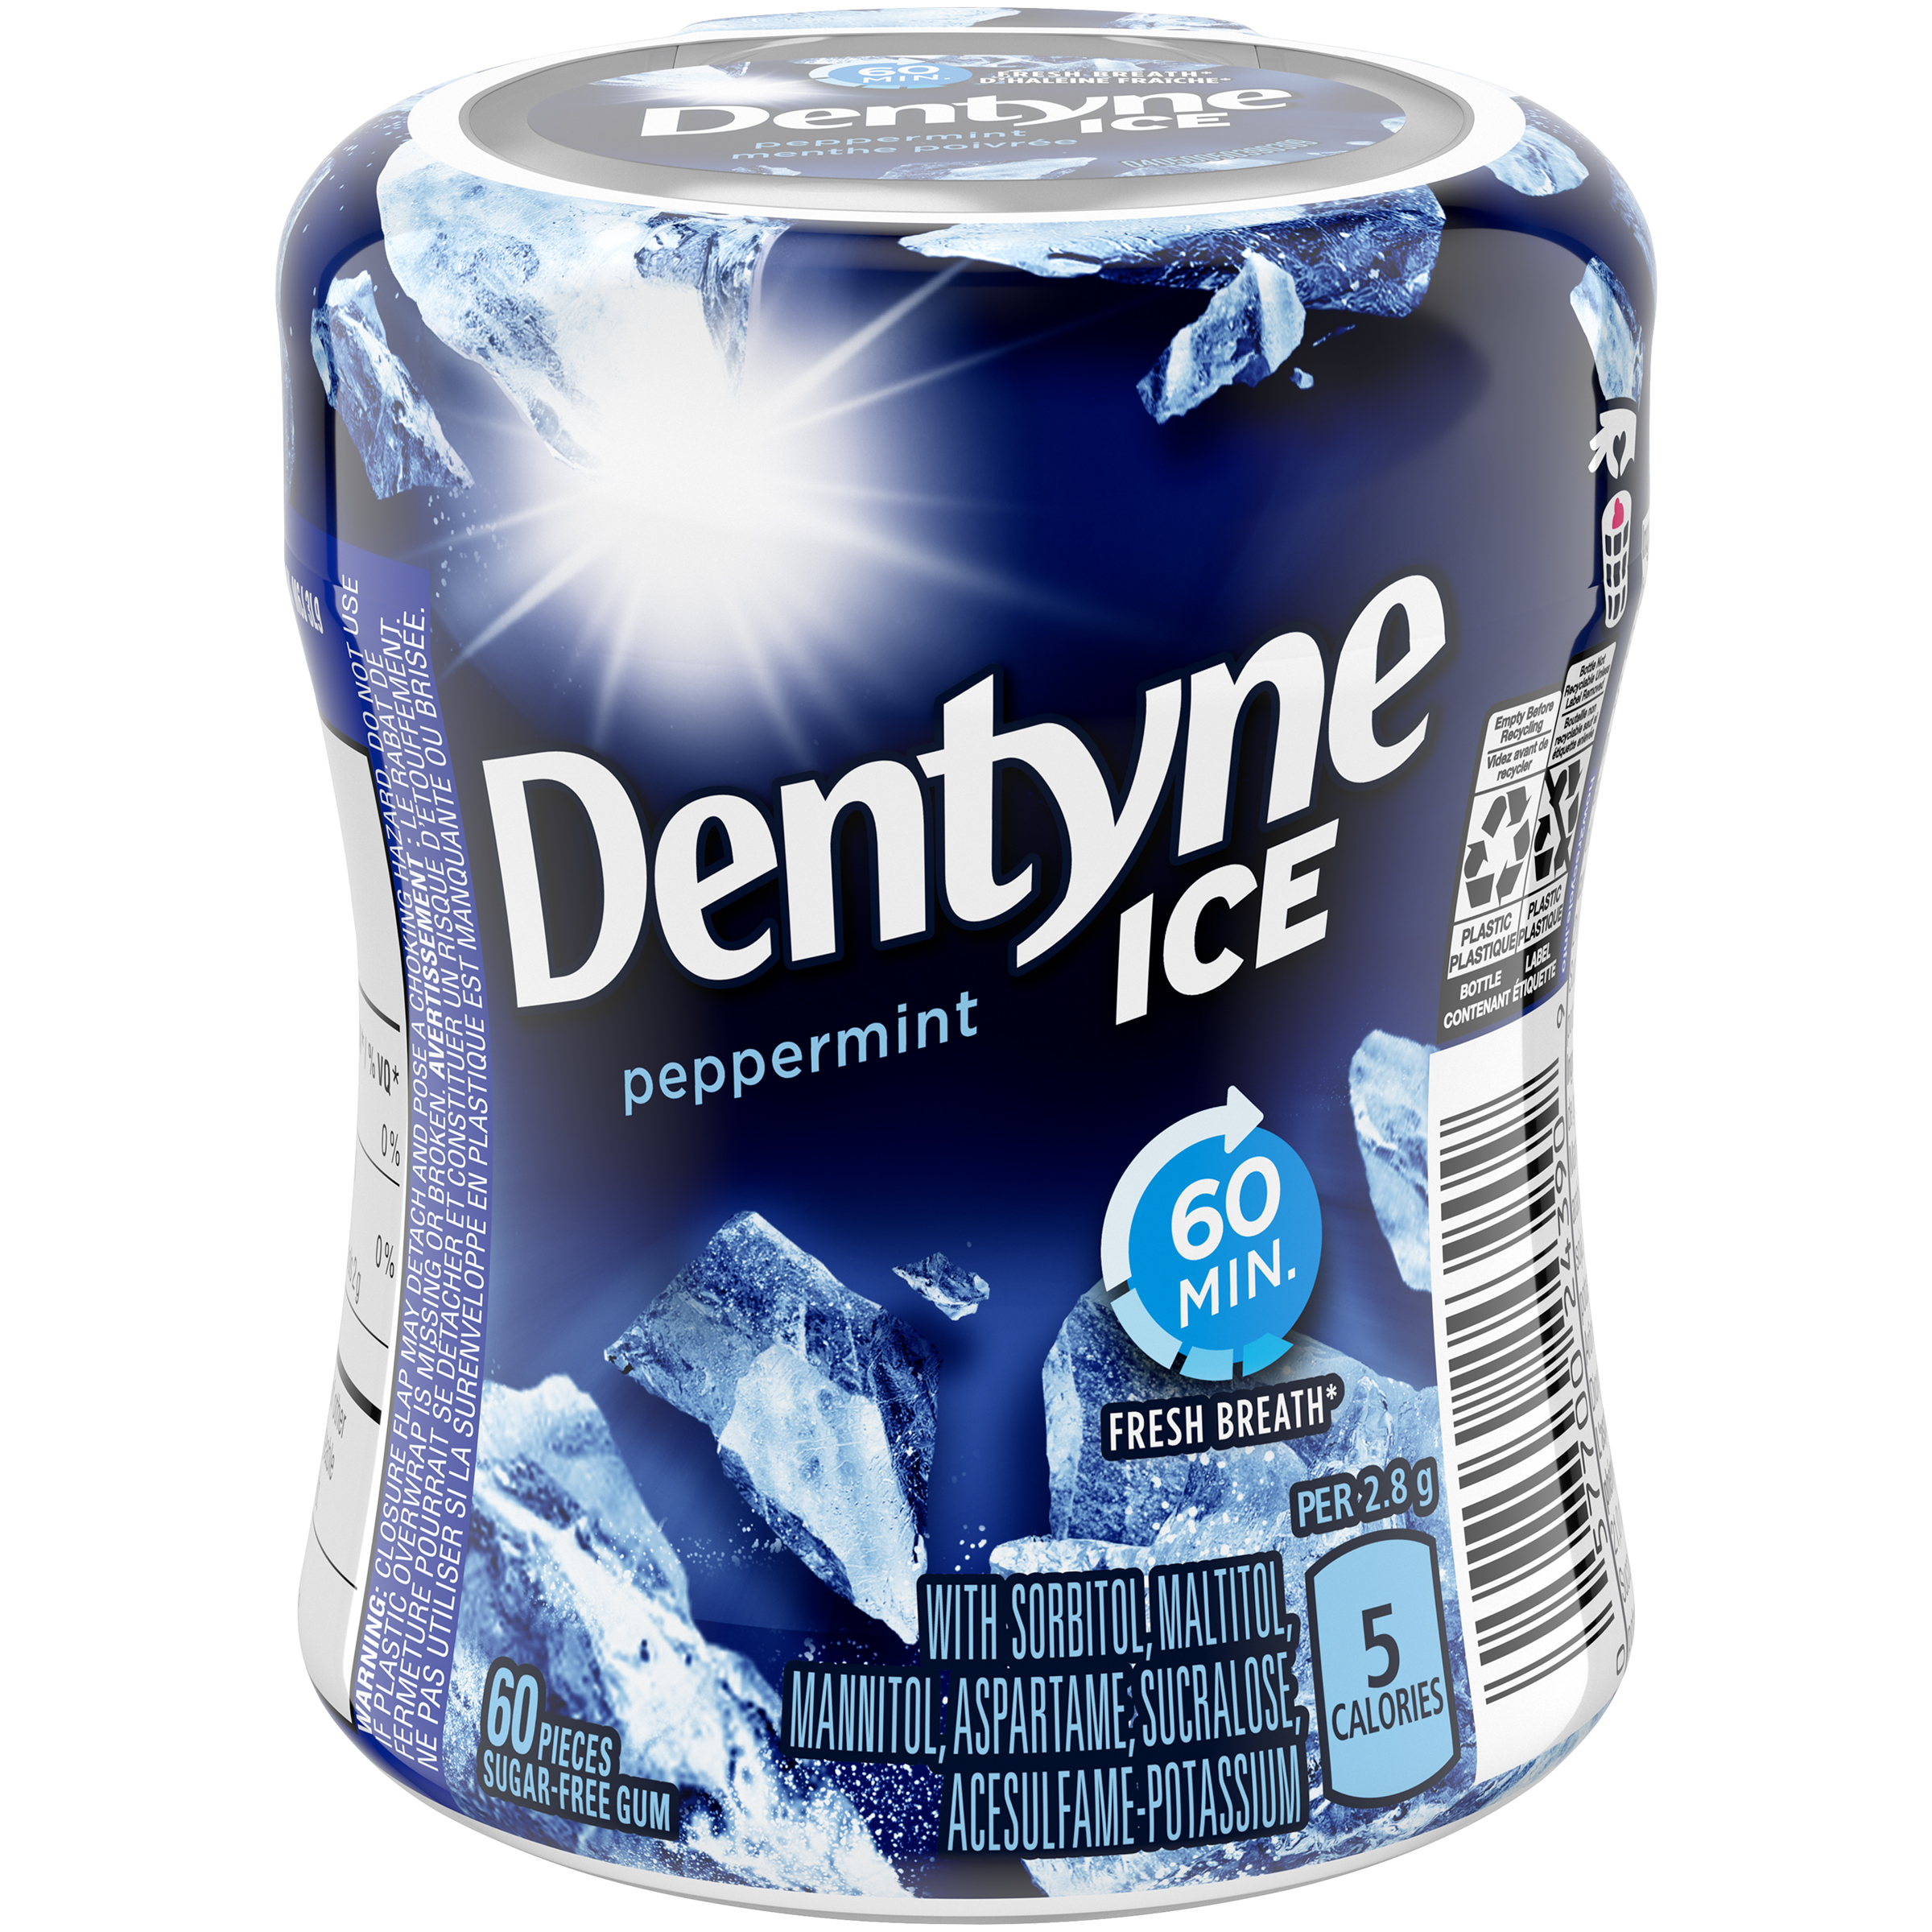 Dentyne Ice Peppermint Gum 60 Count